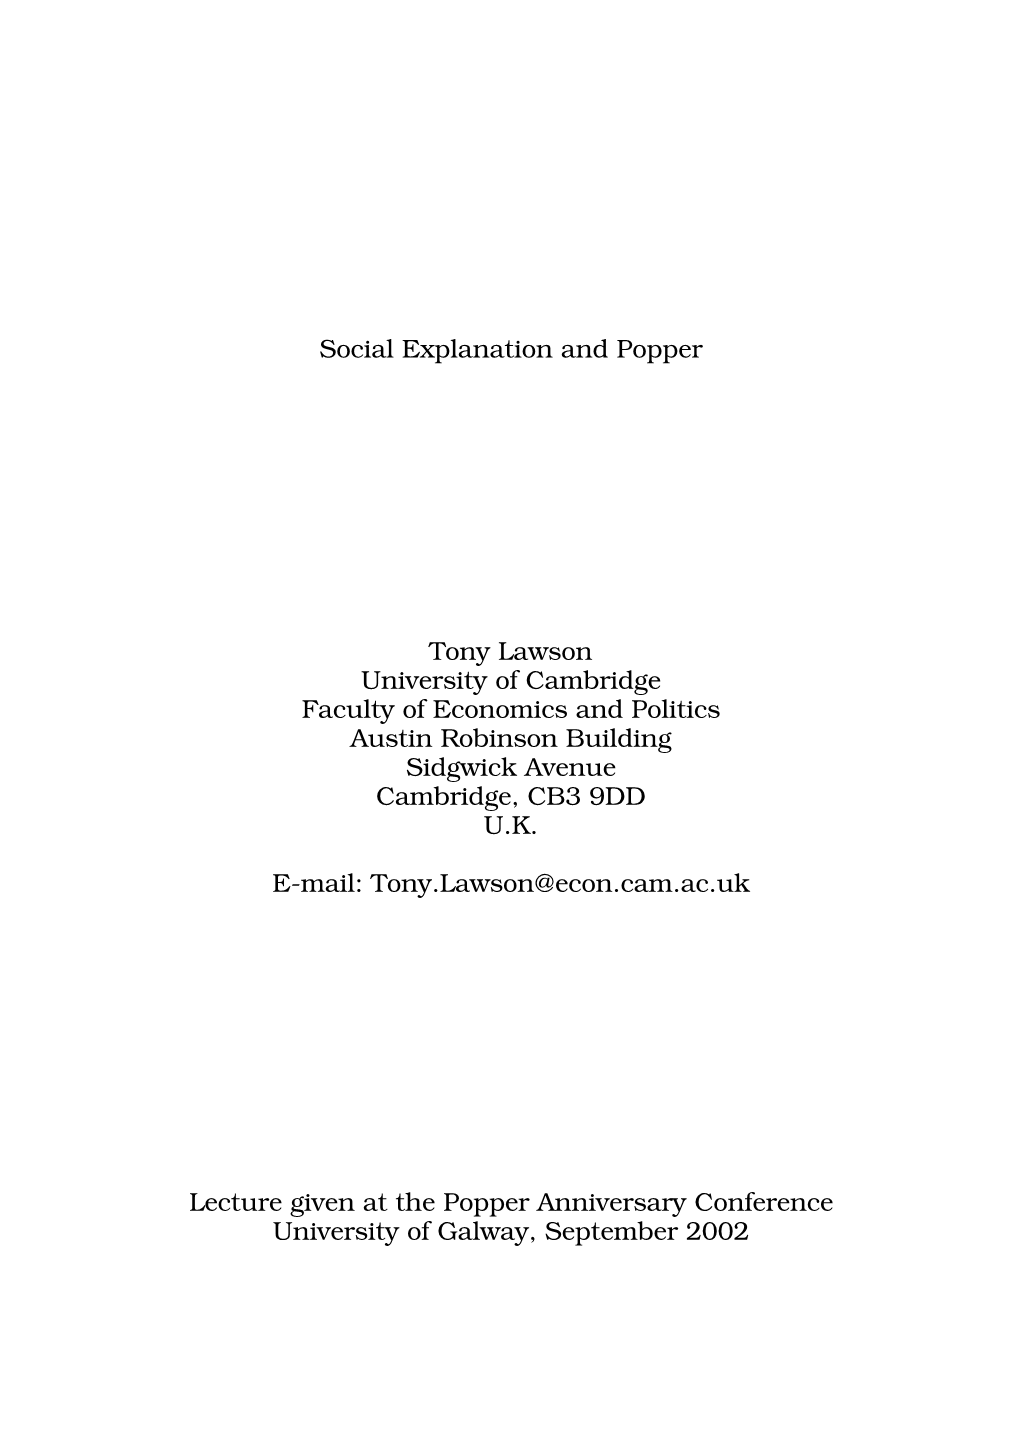 Social Explanation and Popper Tony Lawson University of Cambridge